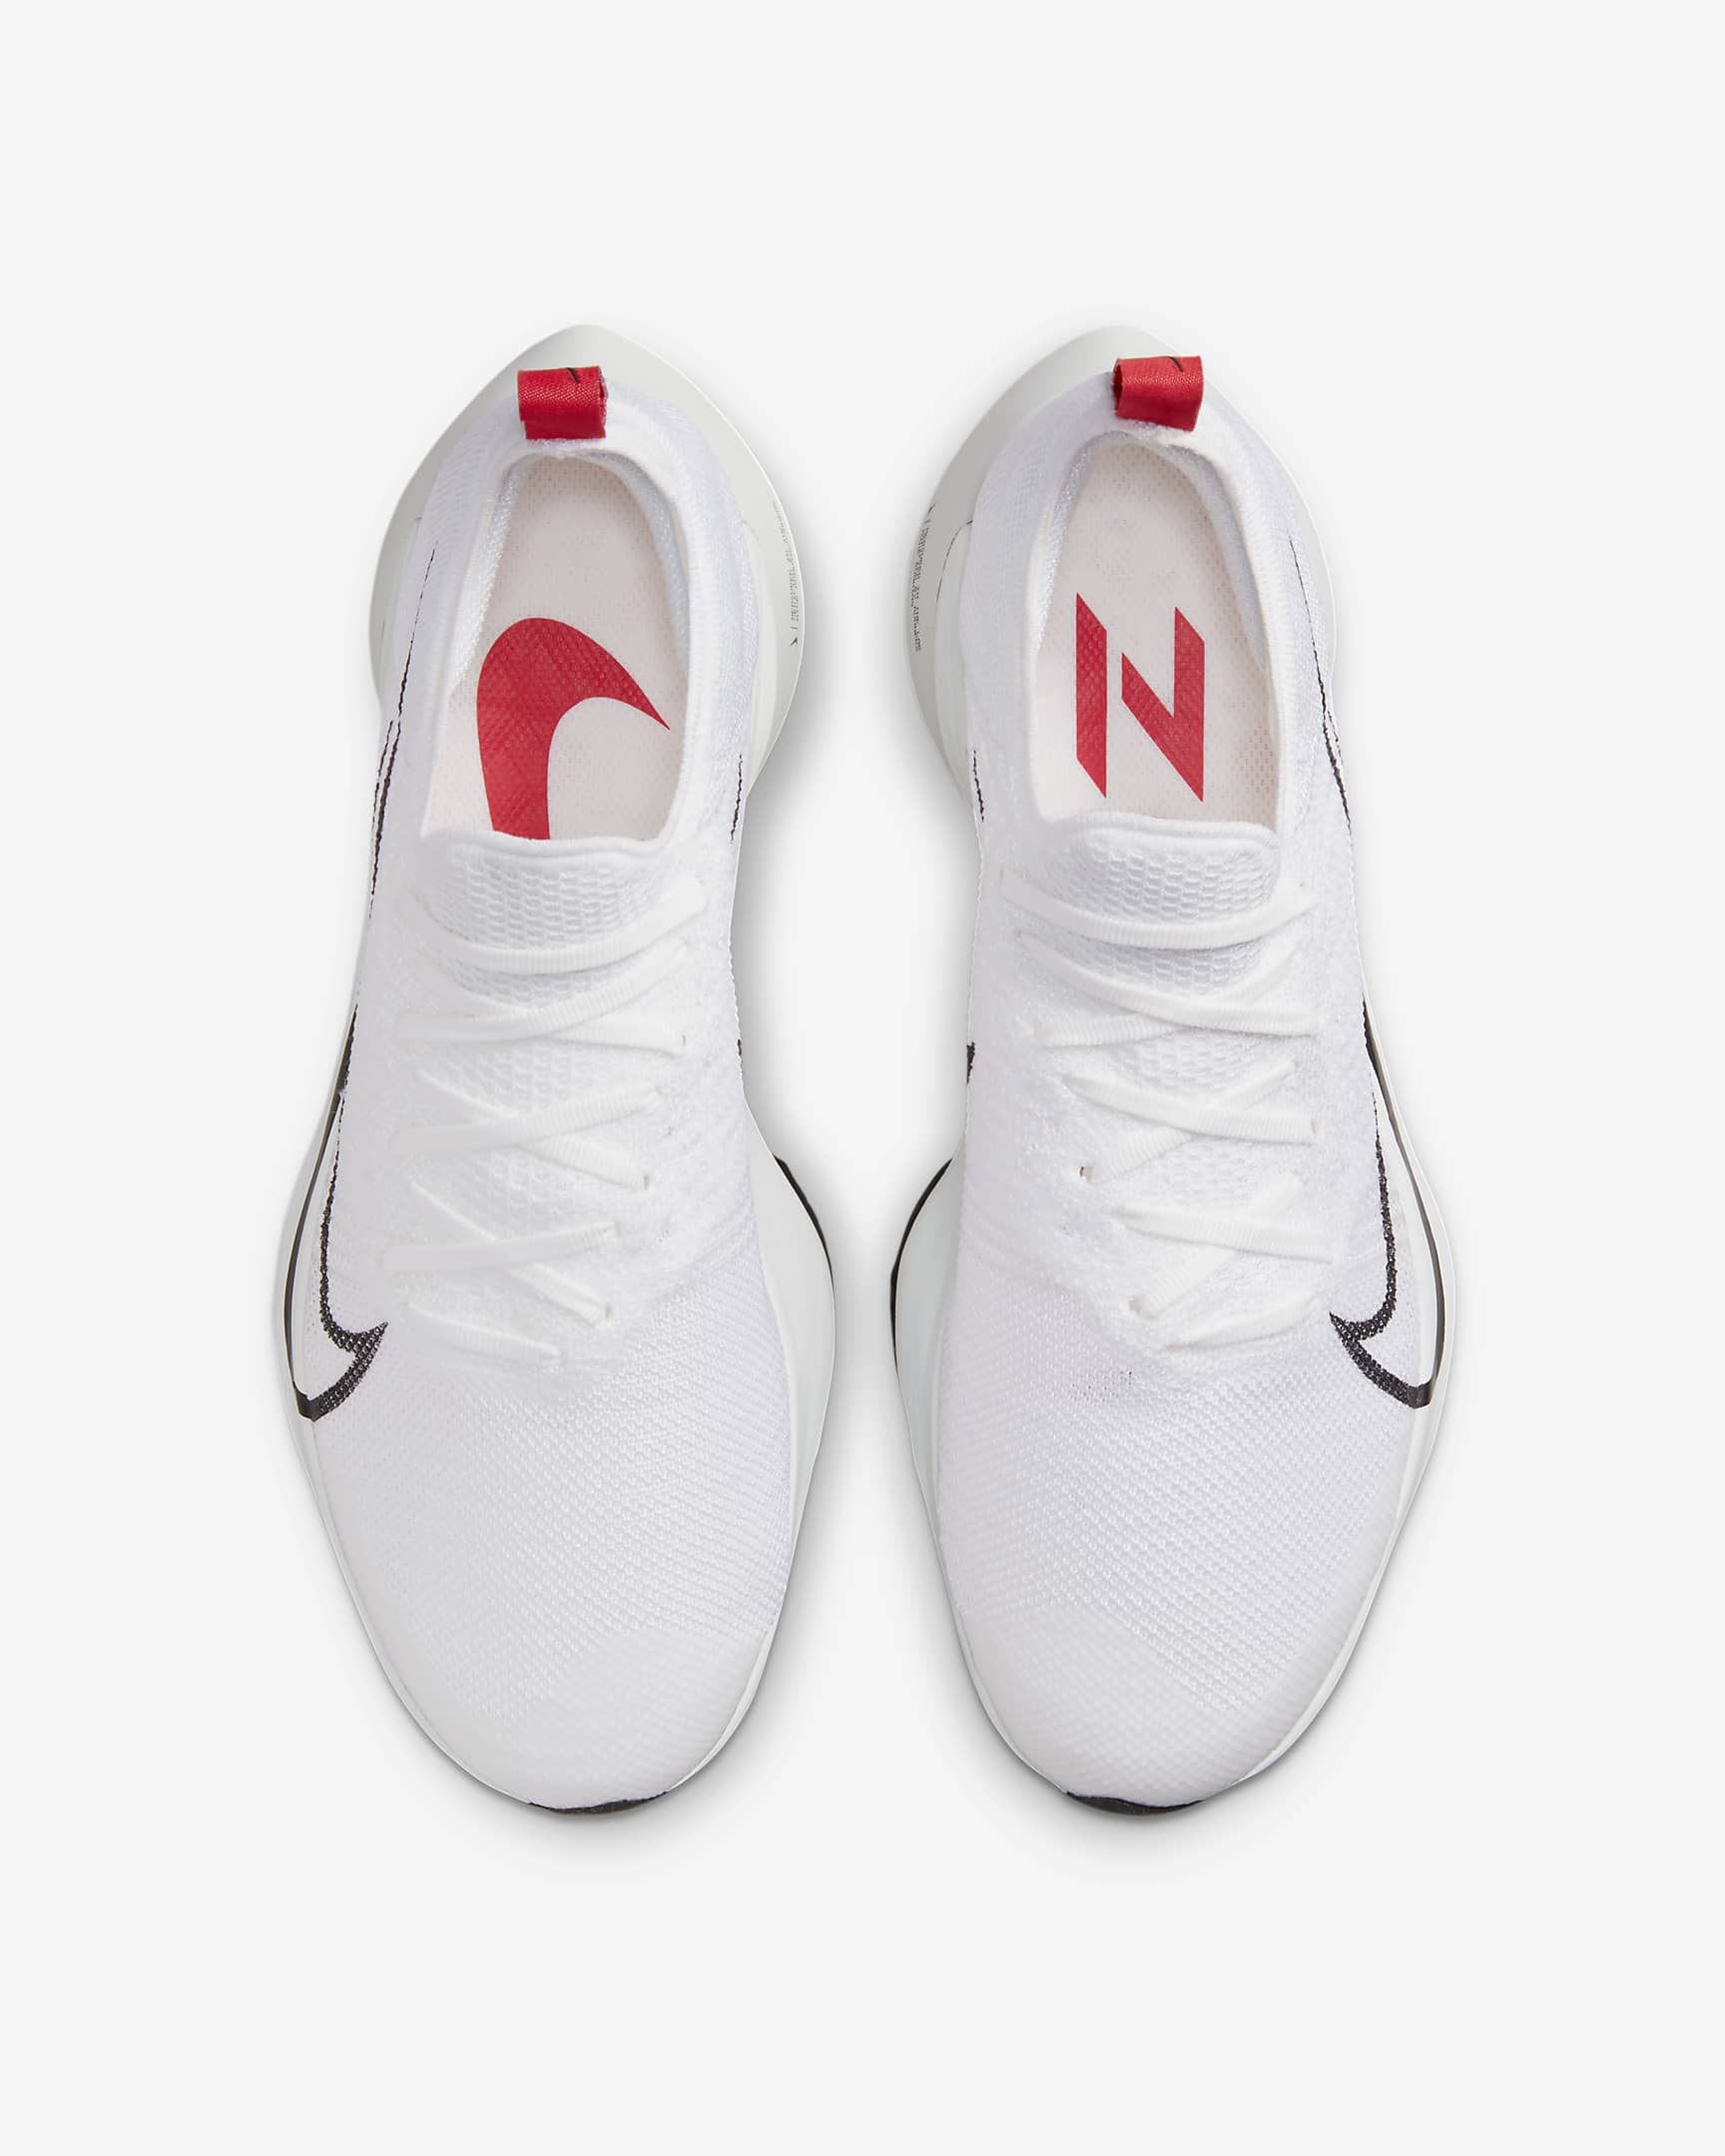 Nike Tempo Men's Road Running Shoes - White/Light Crimson/Platinum Tint/Black